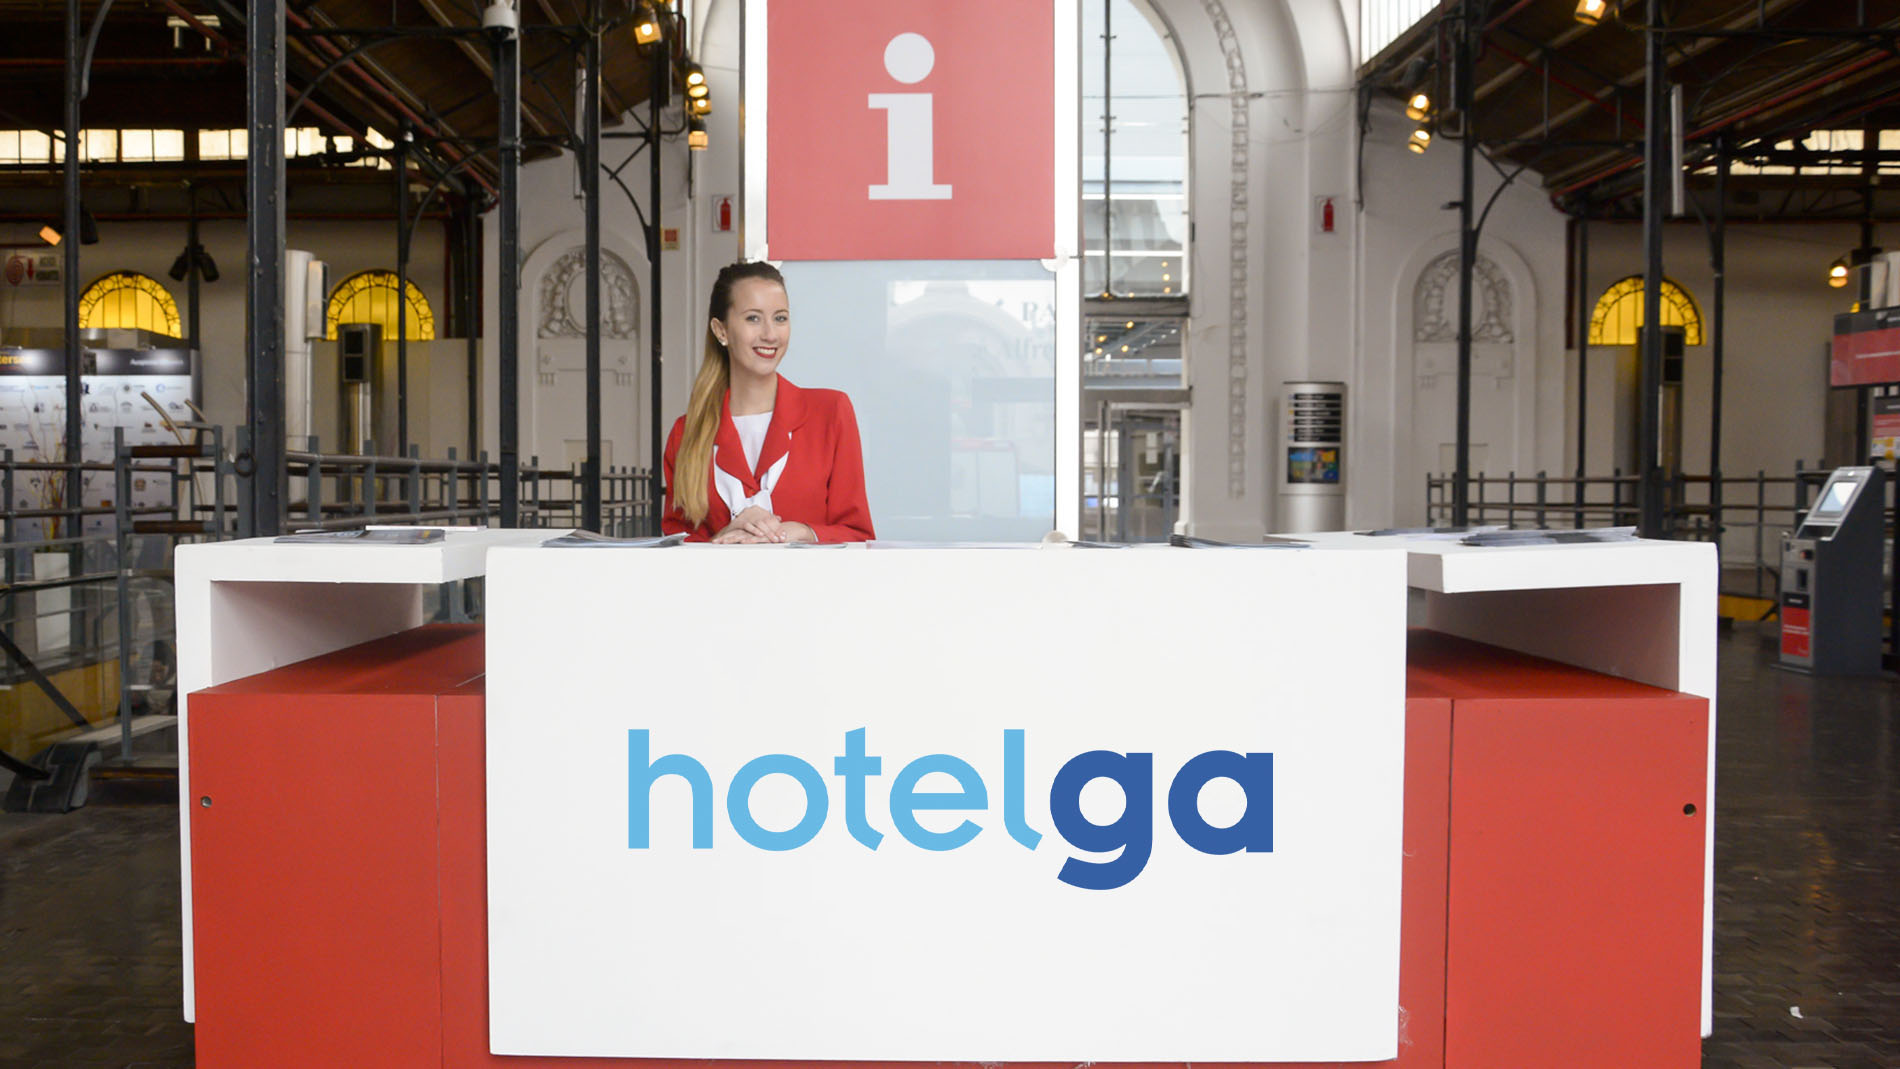 Hotelga: Information Booths